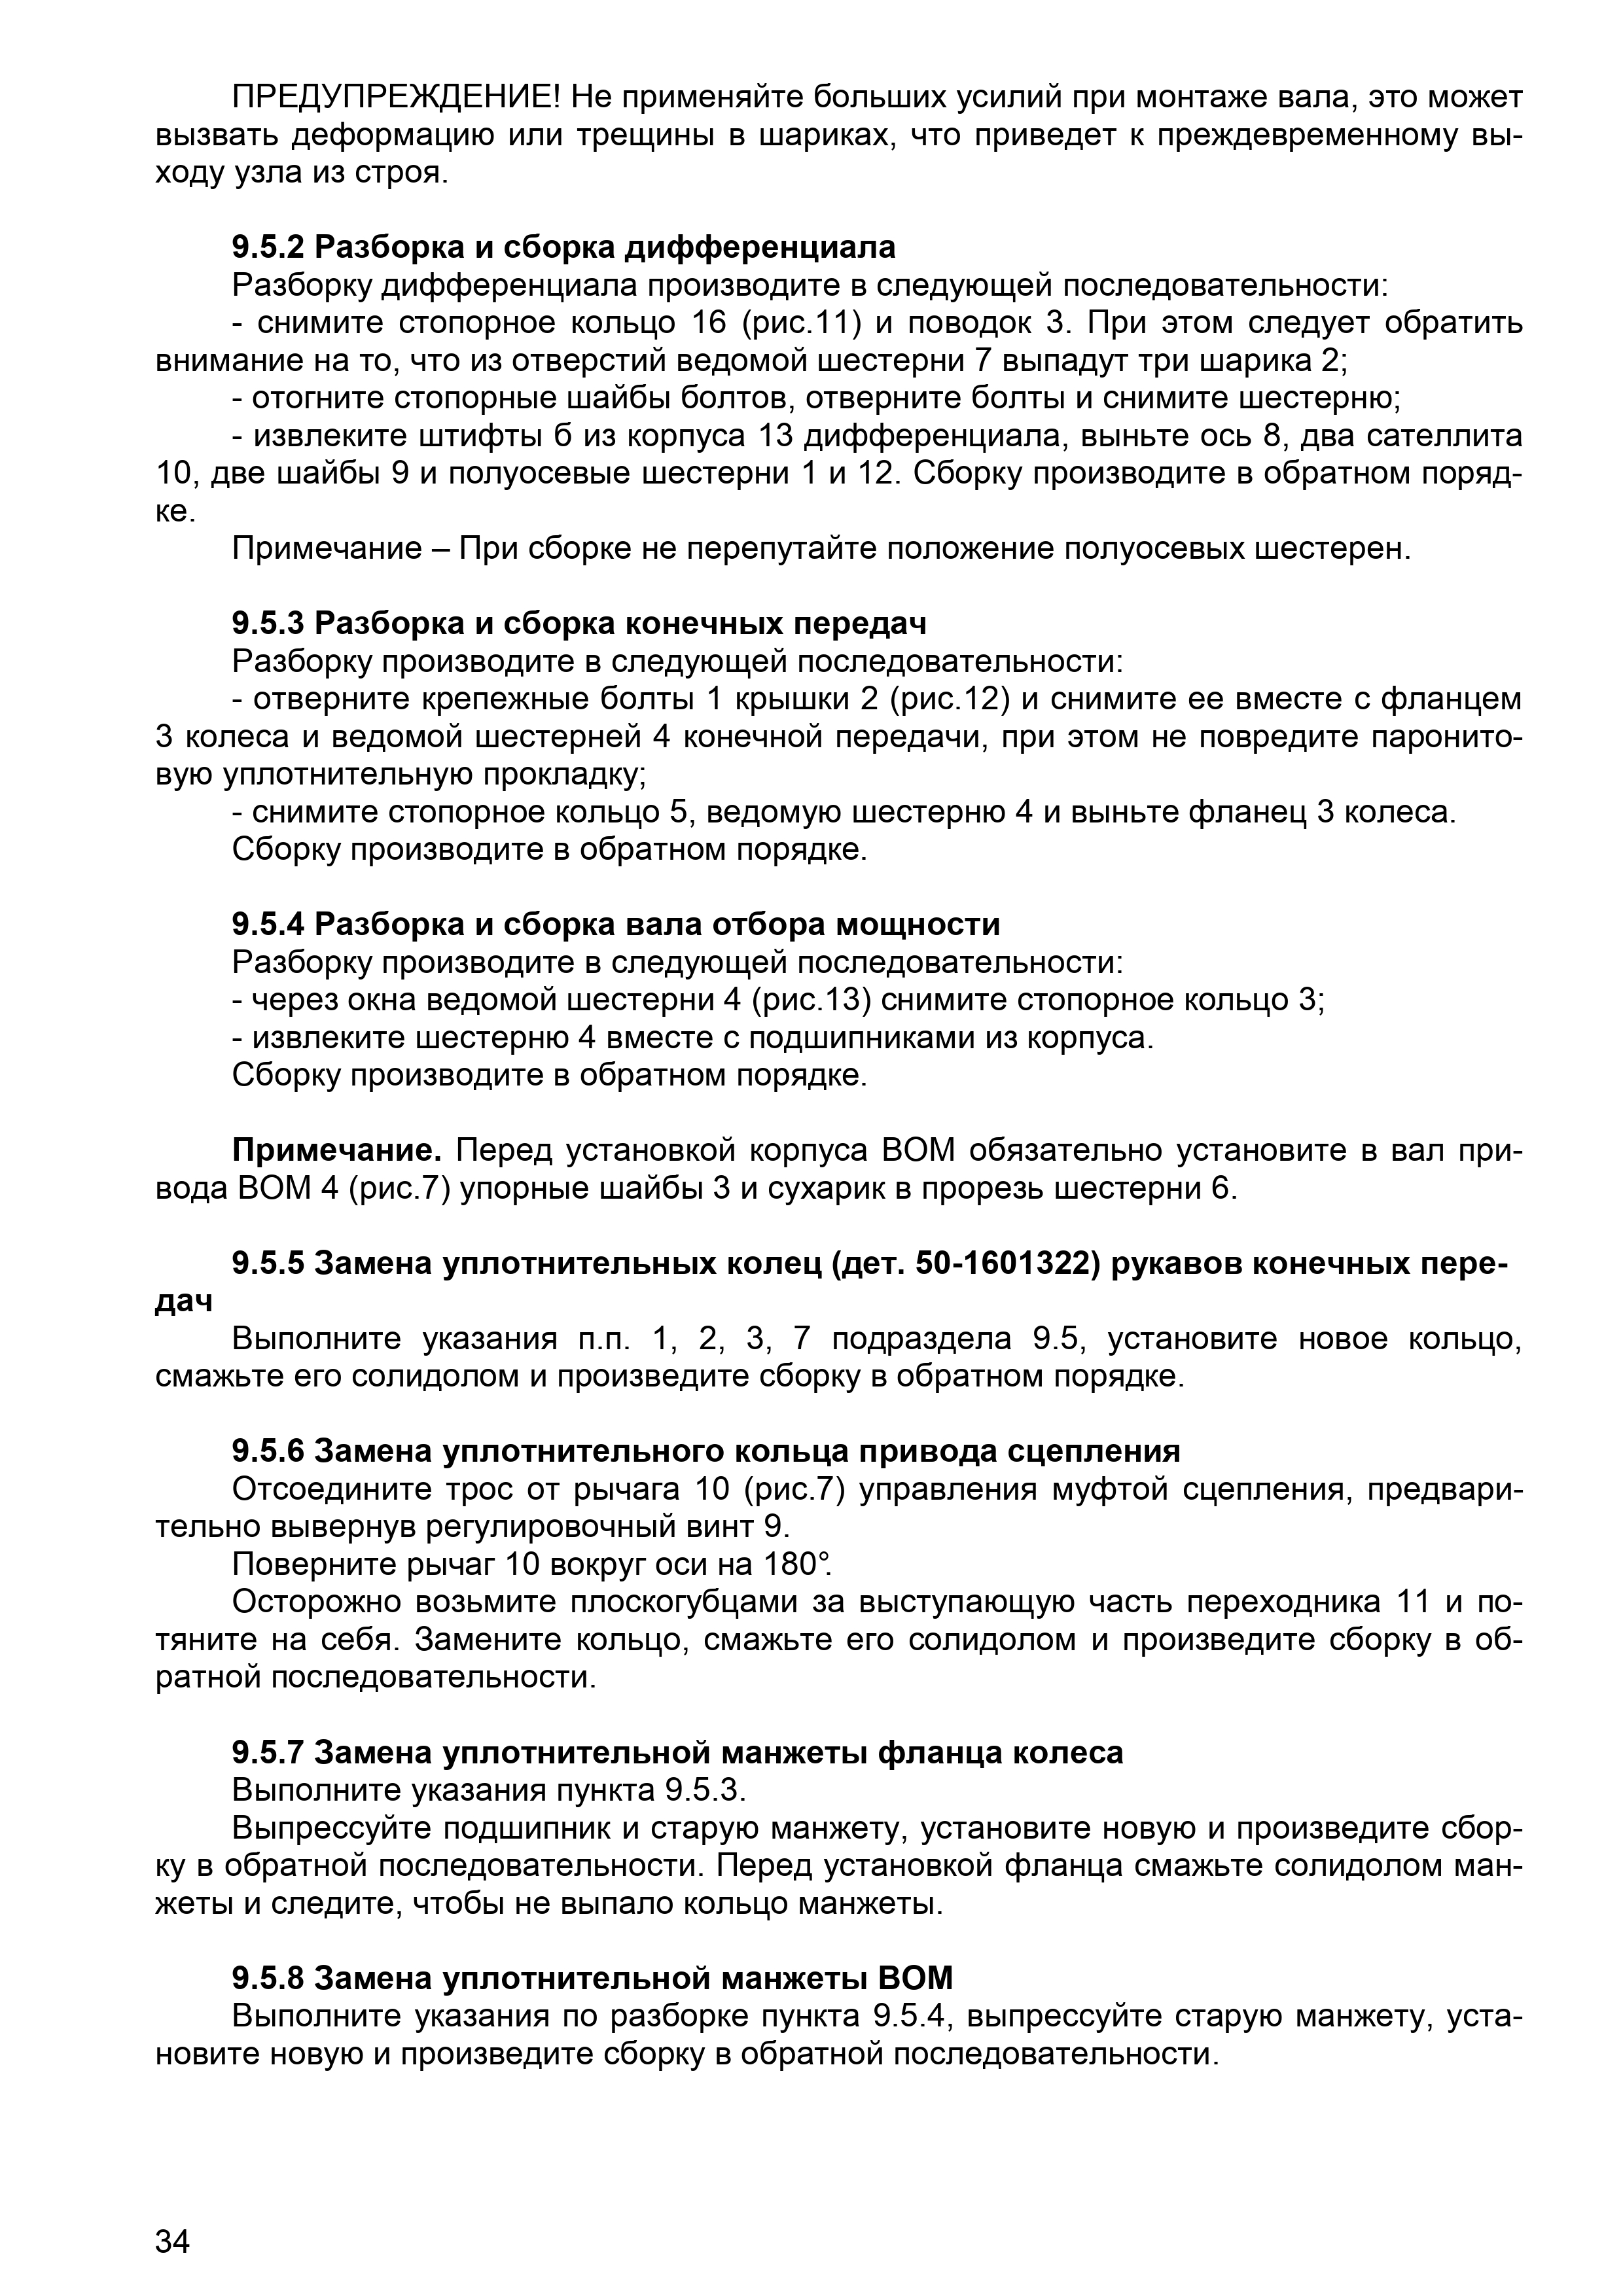 belarus_09h_manual i catalog (1)_page-0034